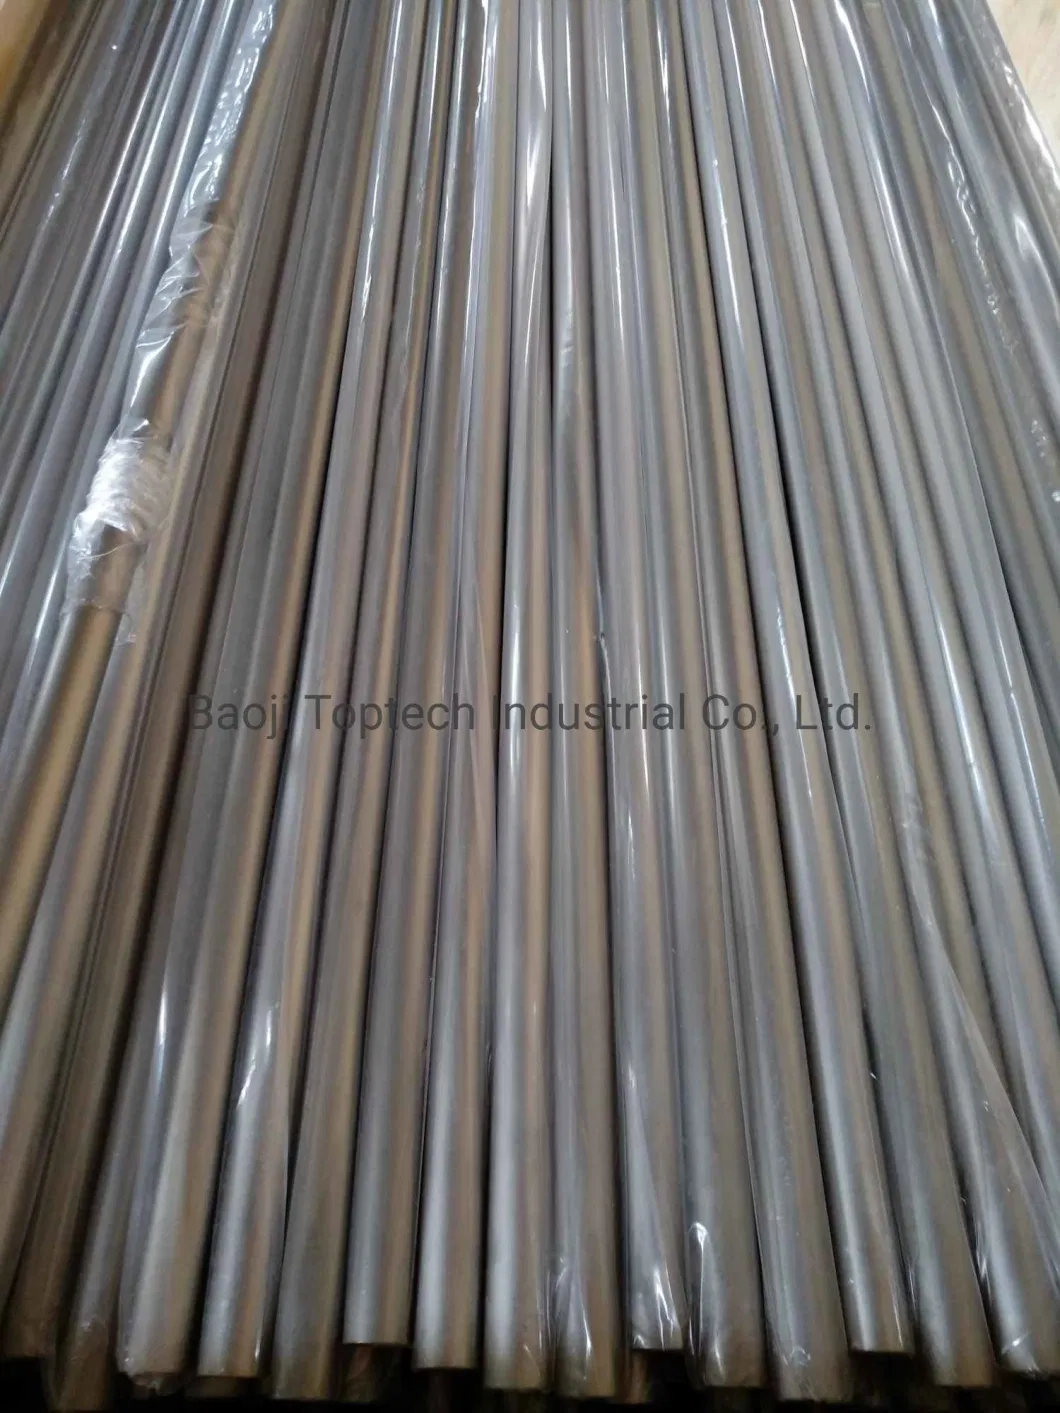 Titanium Pipe Gr2 ASTM B338 High Quality, Titanium Tube (factory price directly)